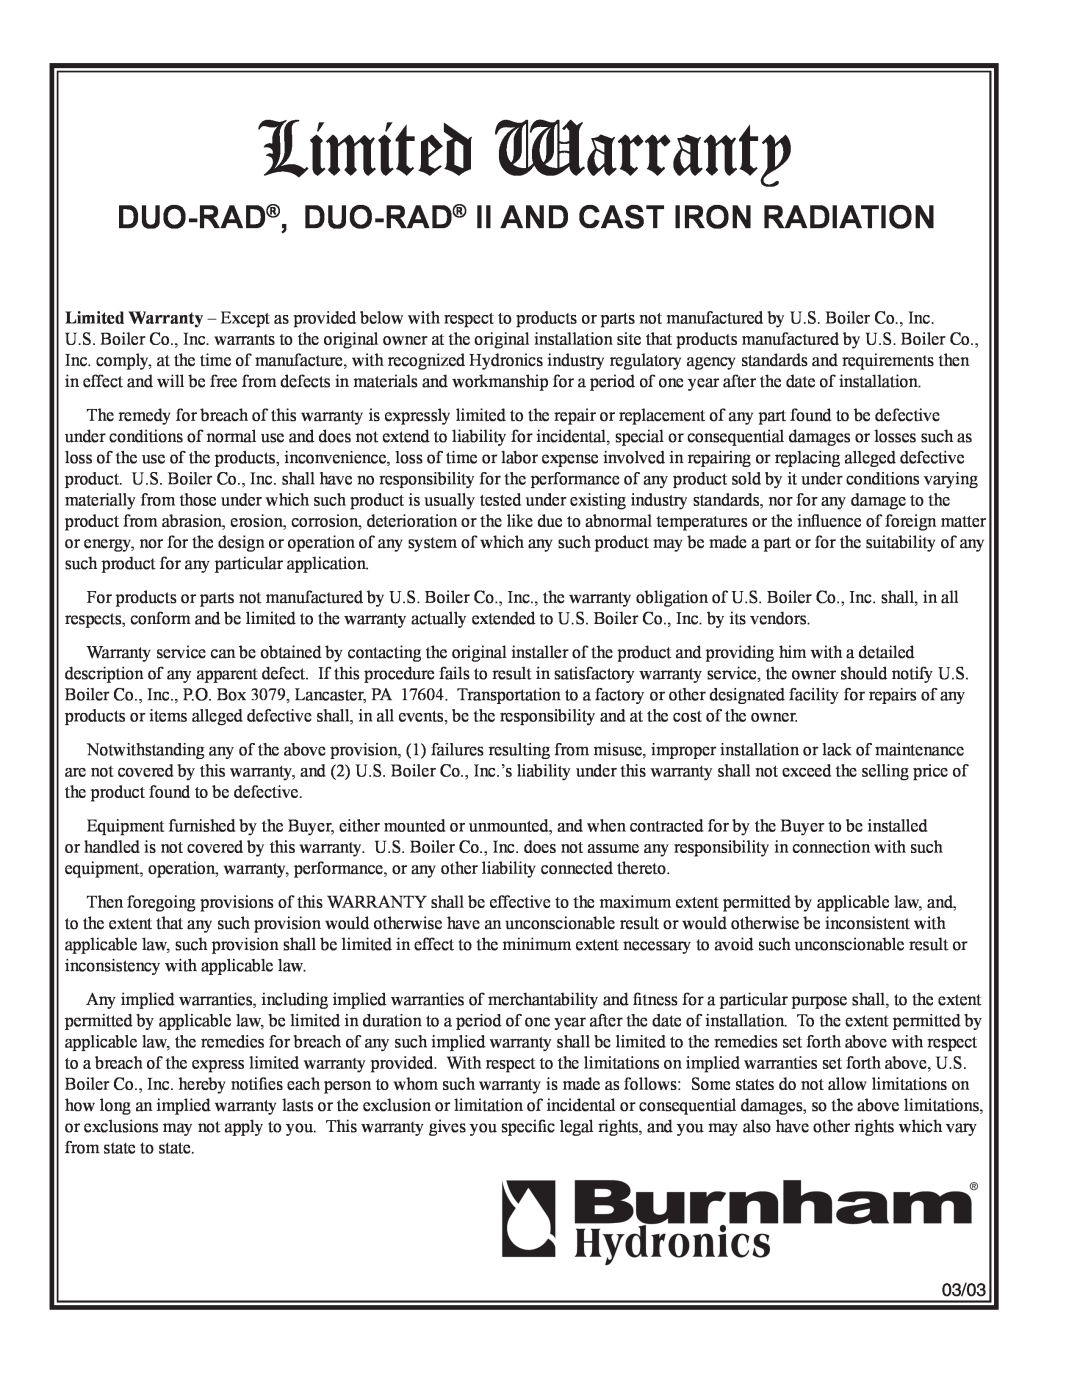 Burnham 81441001R8-3/06 installation instructions Limited Warranty, Duo-Rad, Duo-Rad Ii And Cast Iron Radiation 